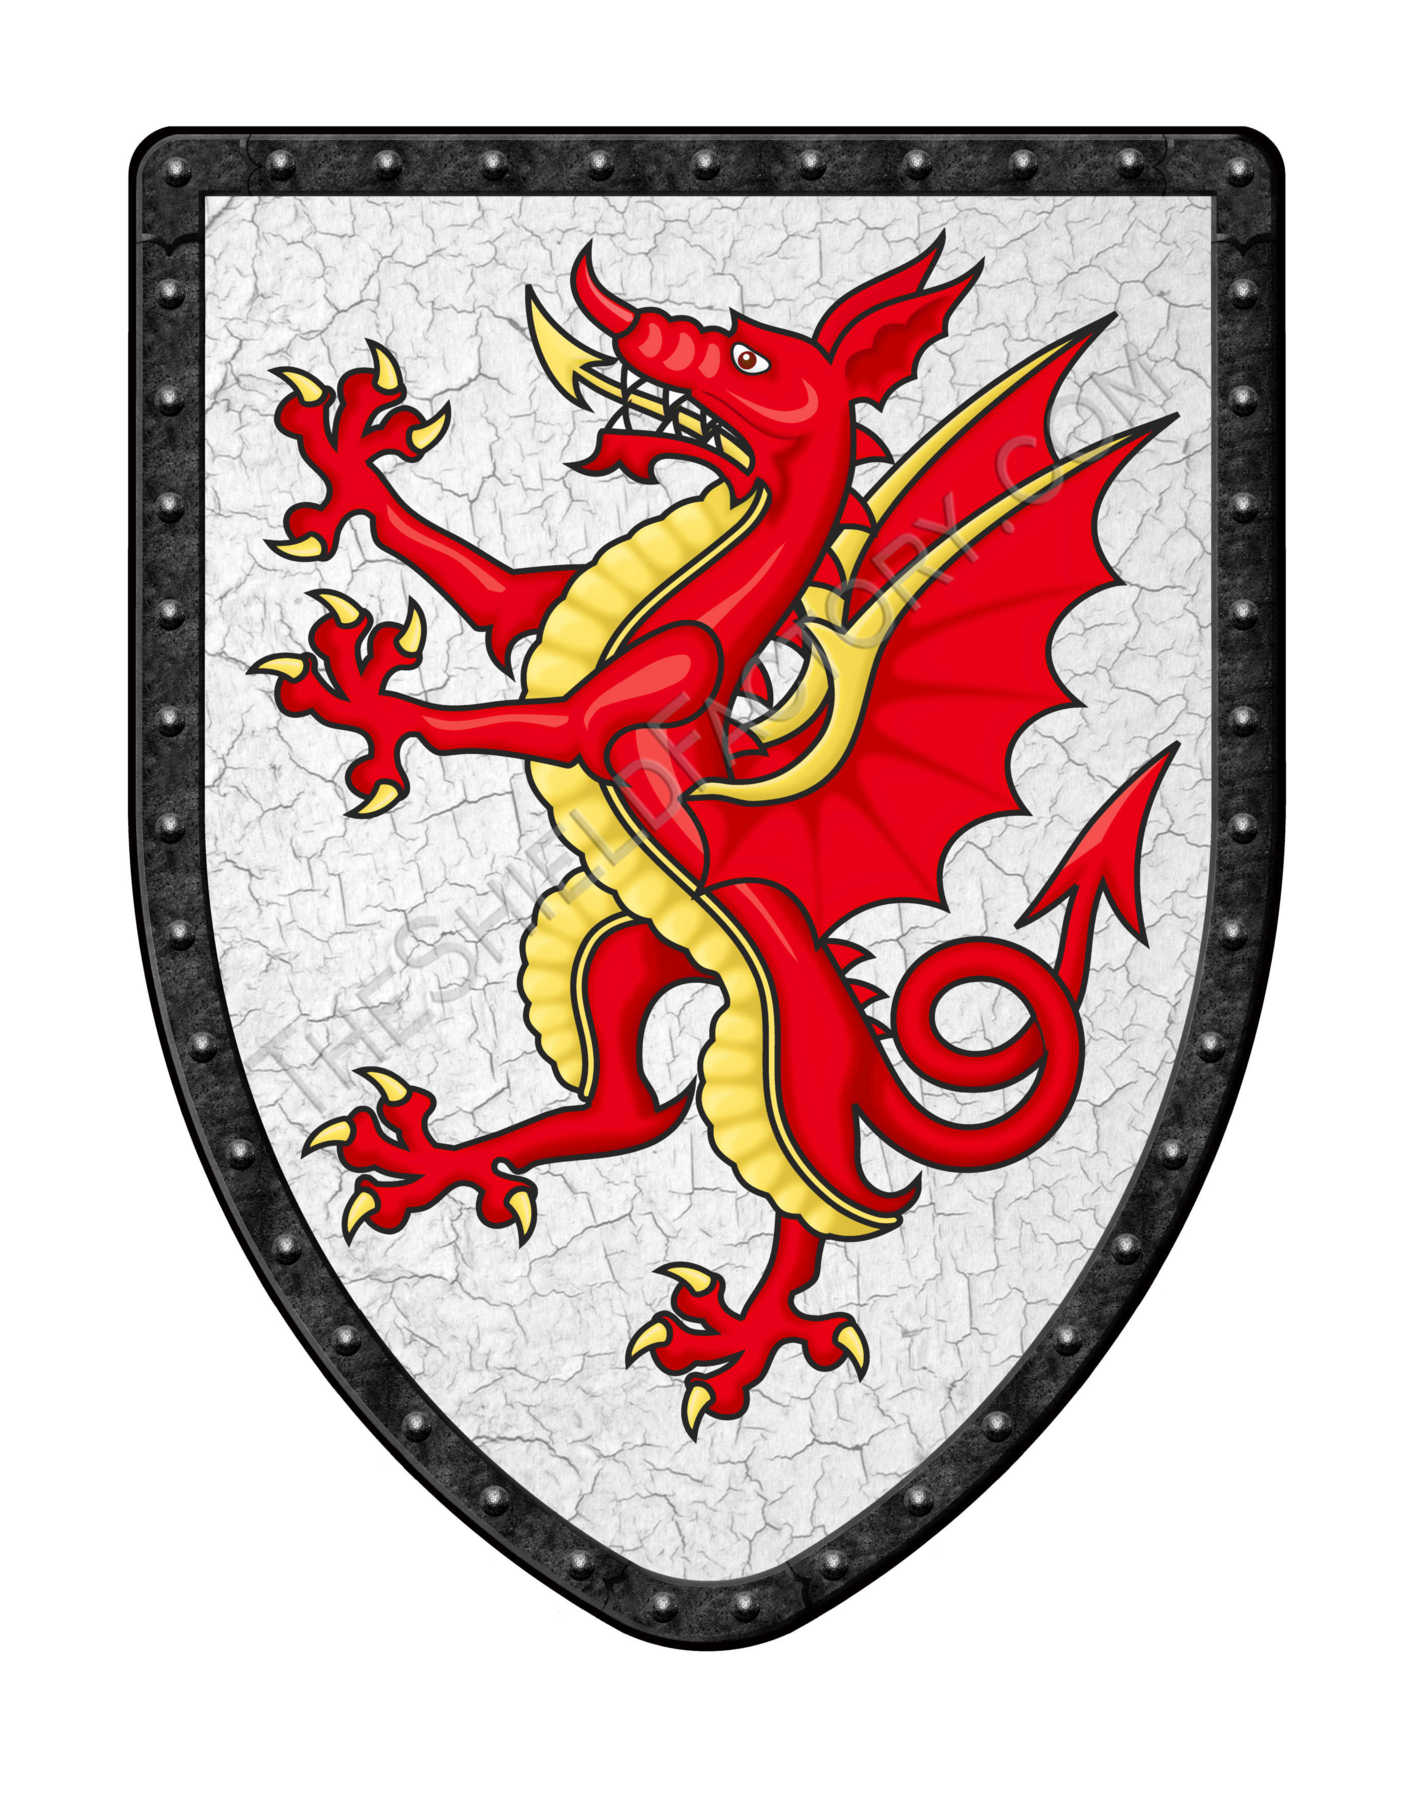 medieval shield replica